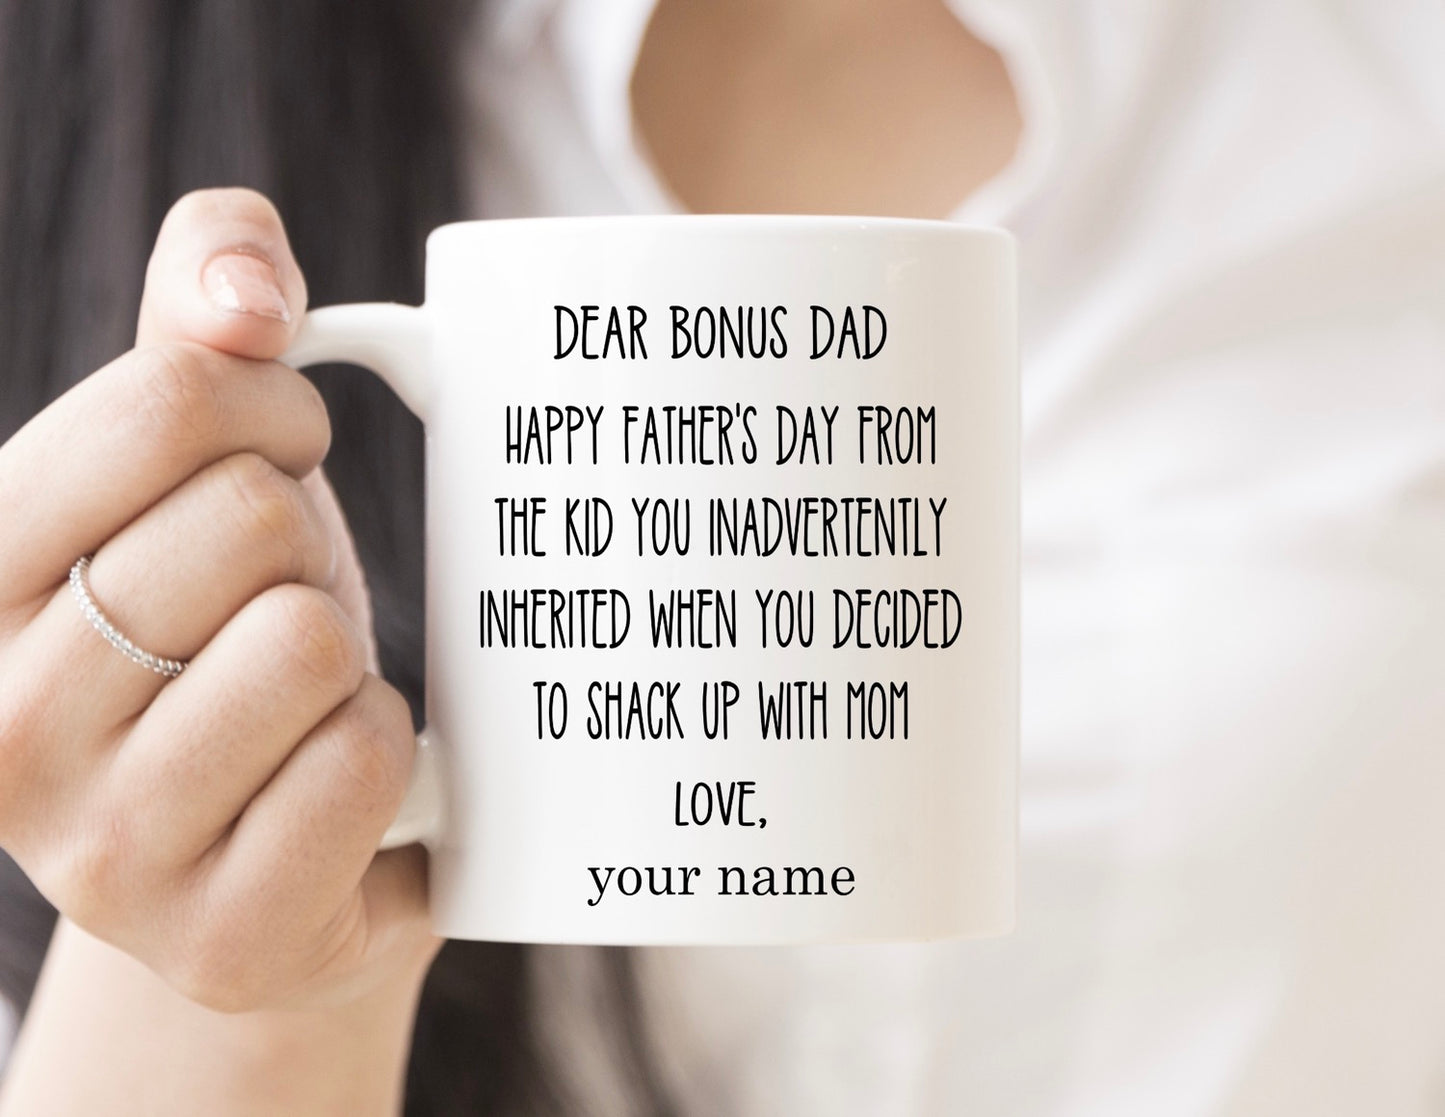 Dear Bonus Dad